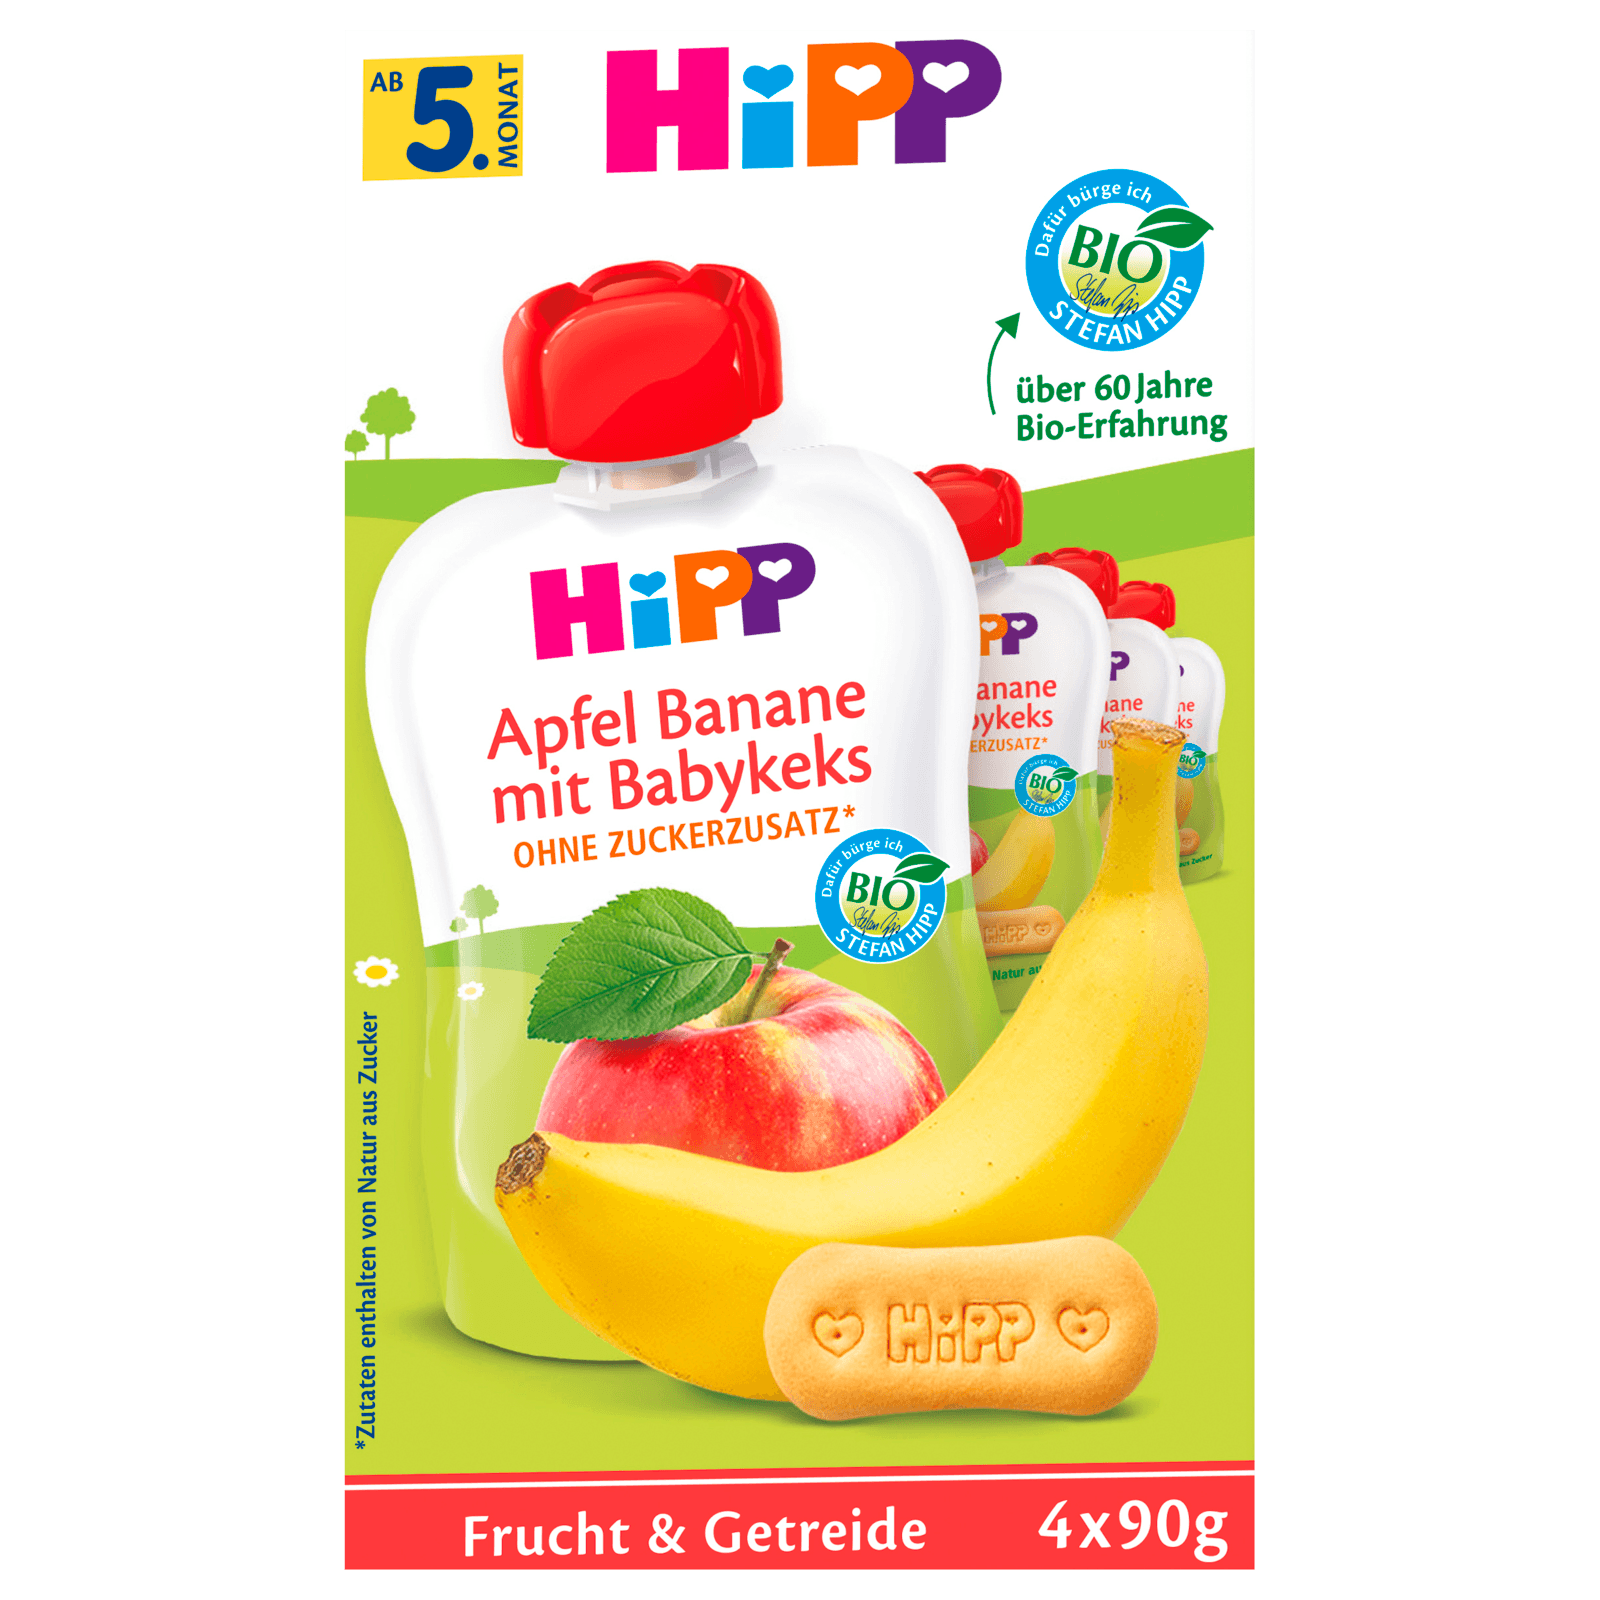 Hipp Bio Apfel-Banane & Babykeks 4x90g